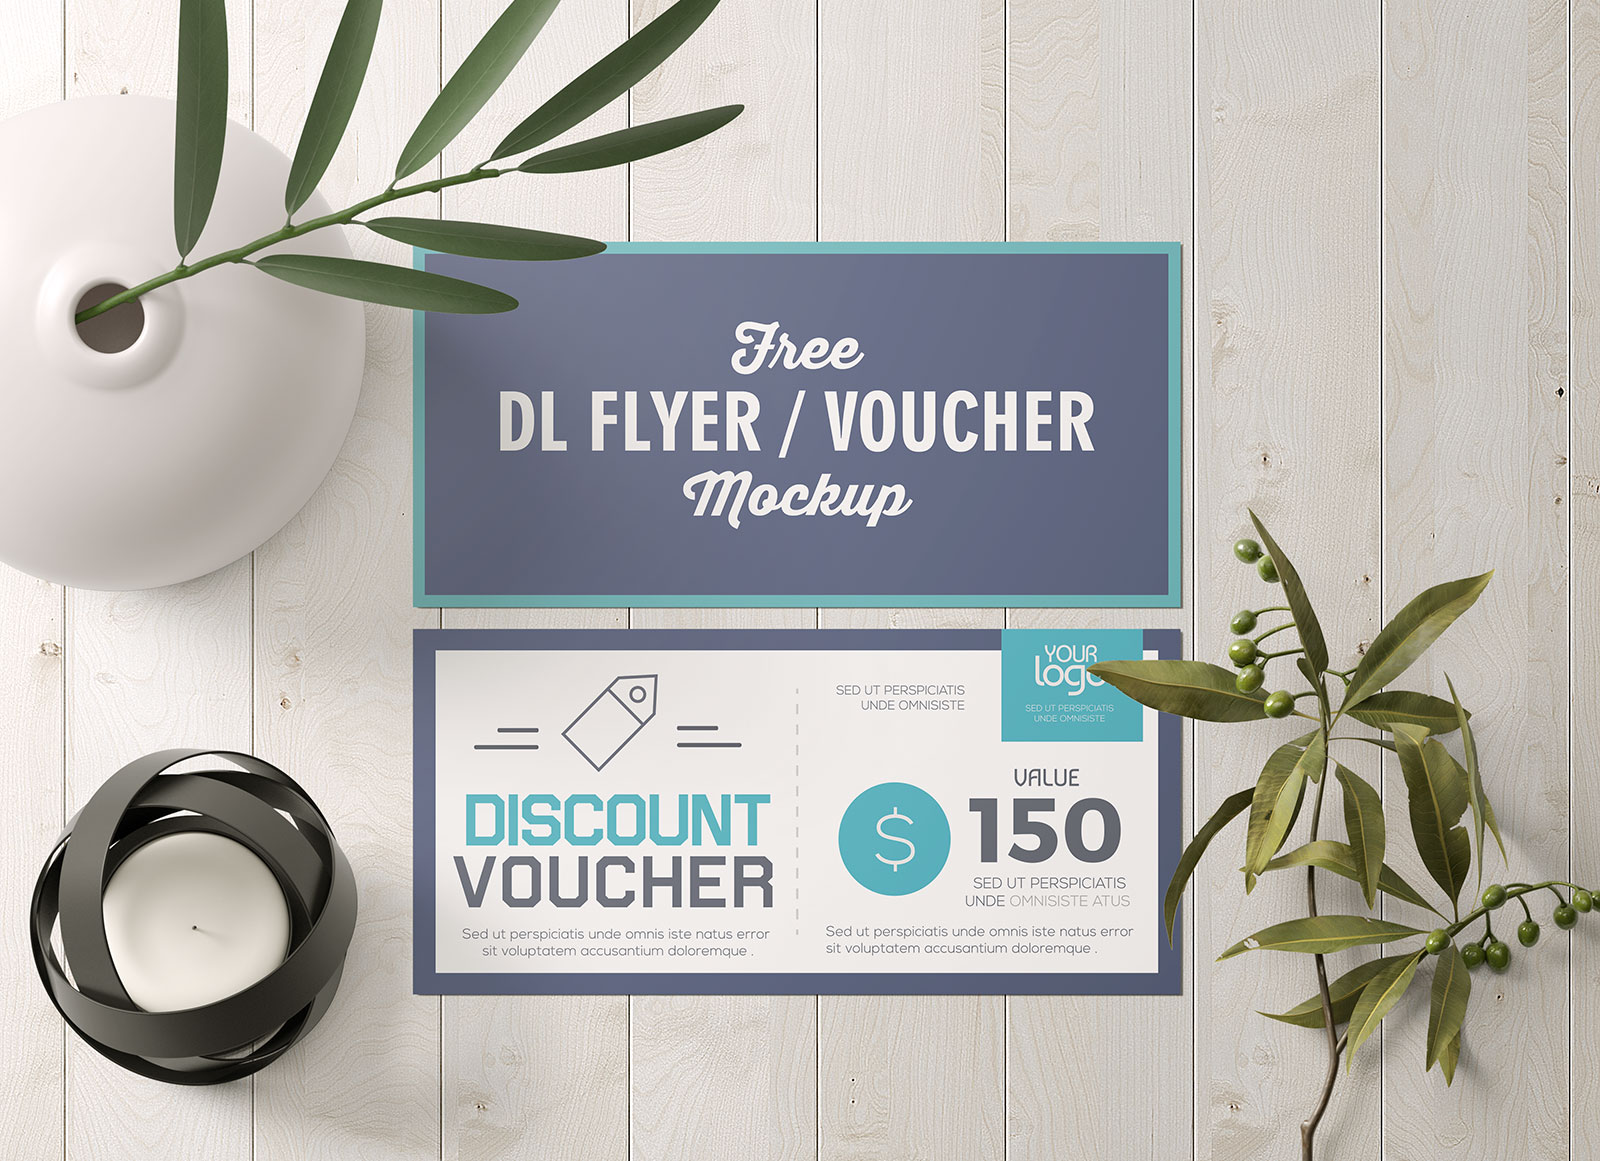 Free-DL-Flyer-Gift-Voucher-Mockup-PSD